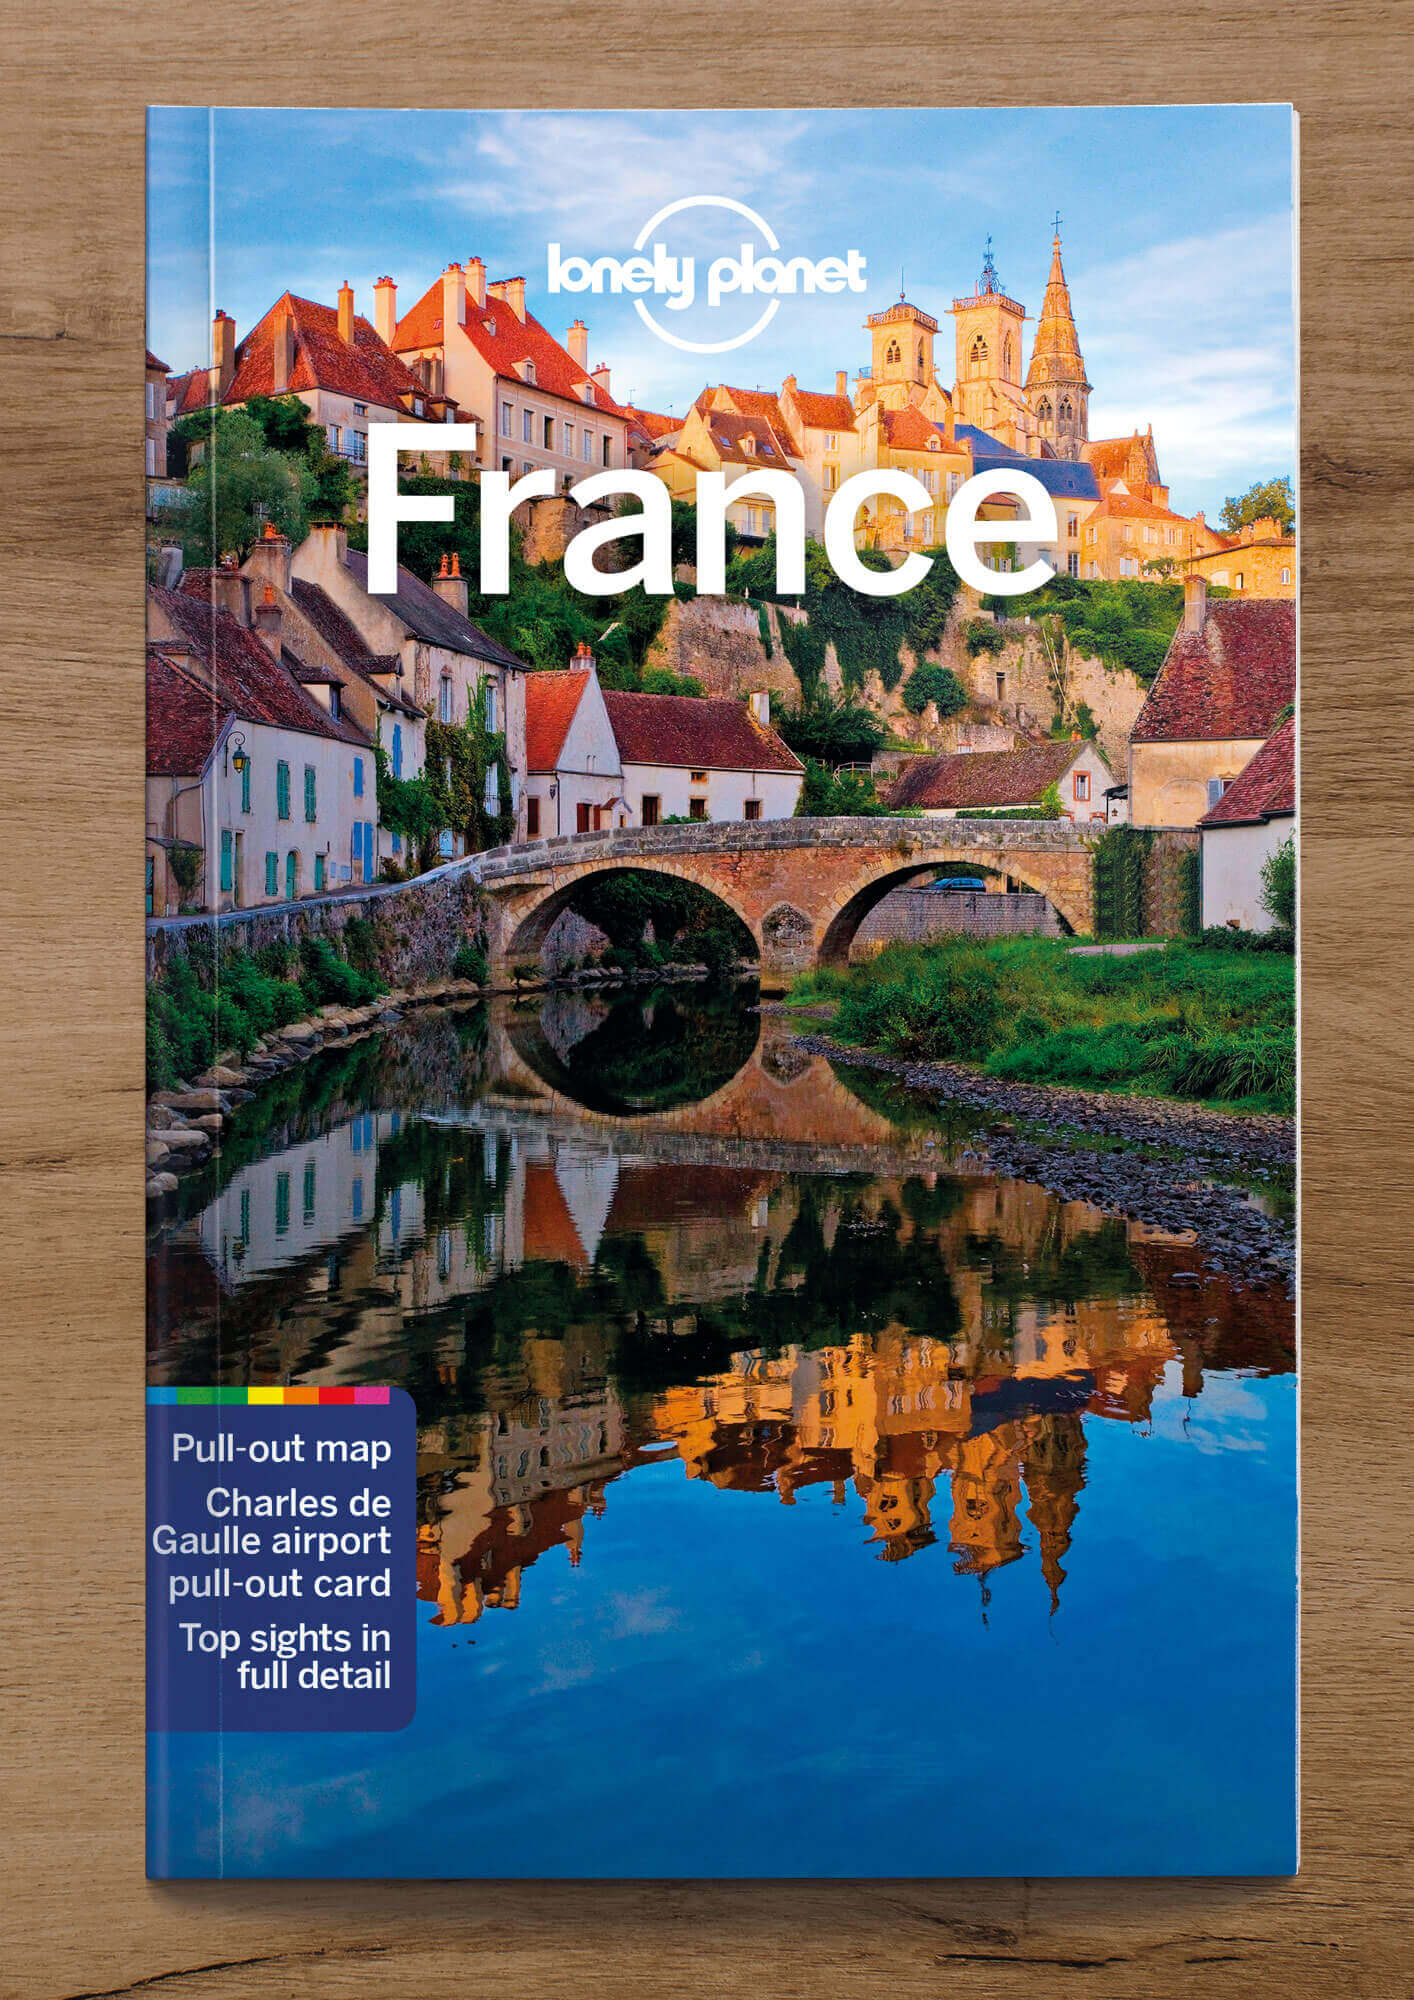  Bestselling Lonelyplanet ebook bundle - France